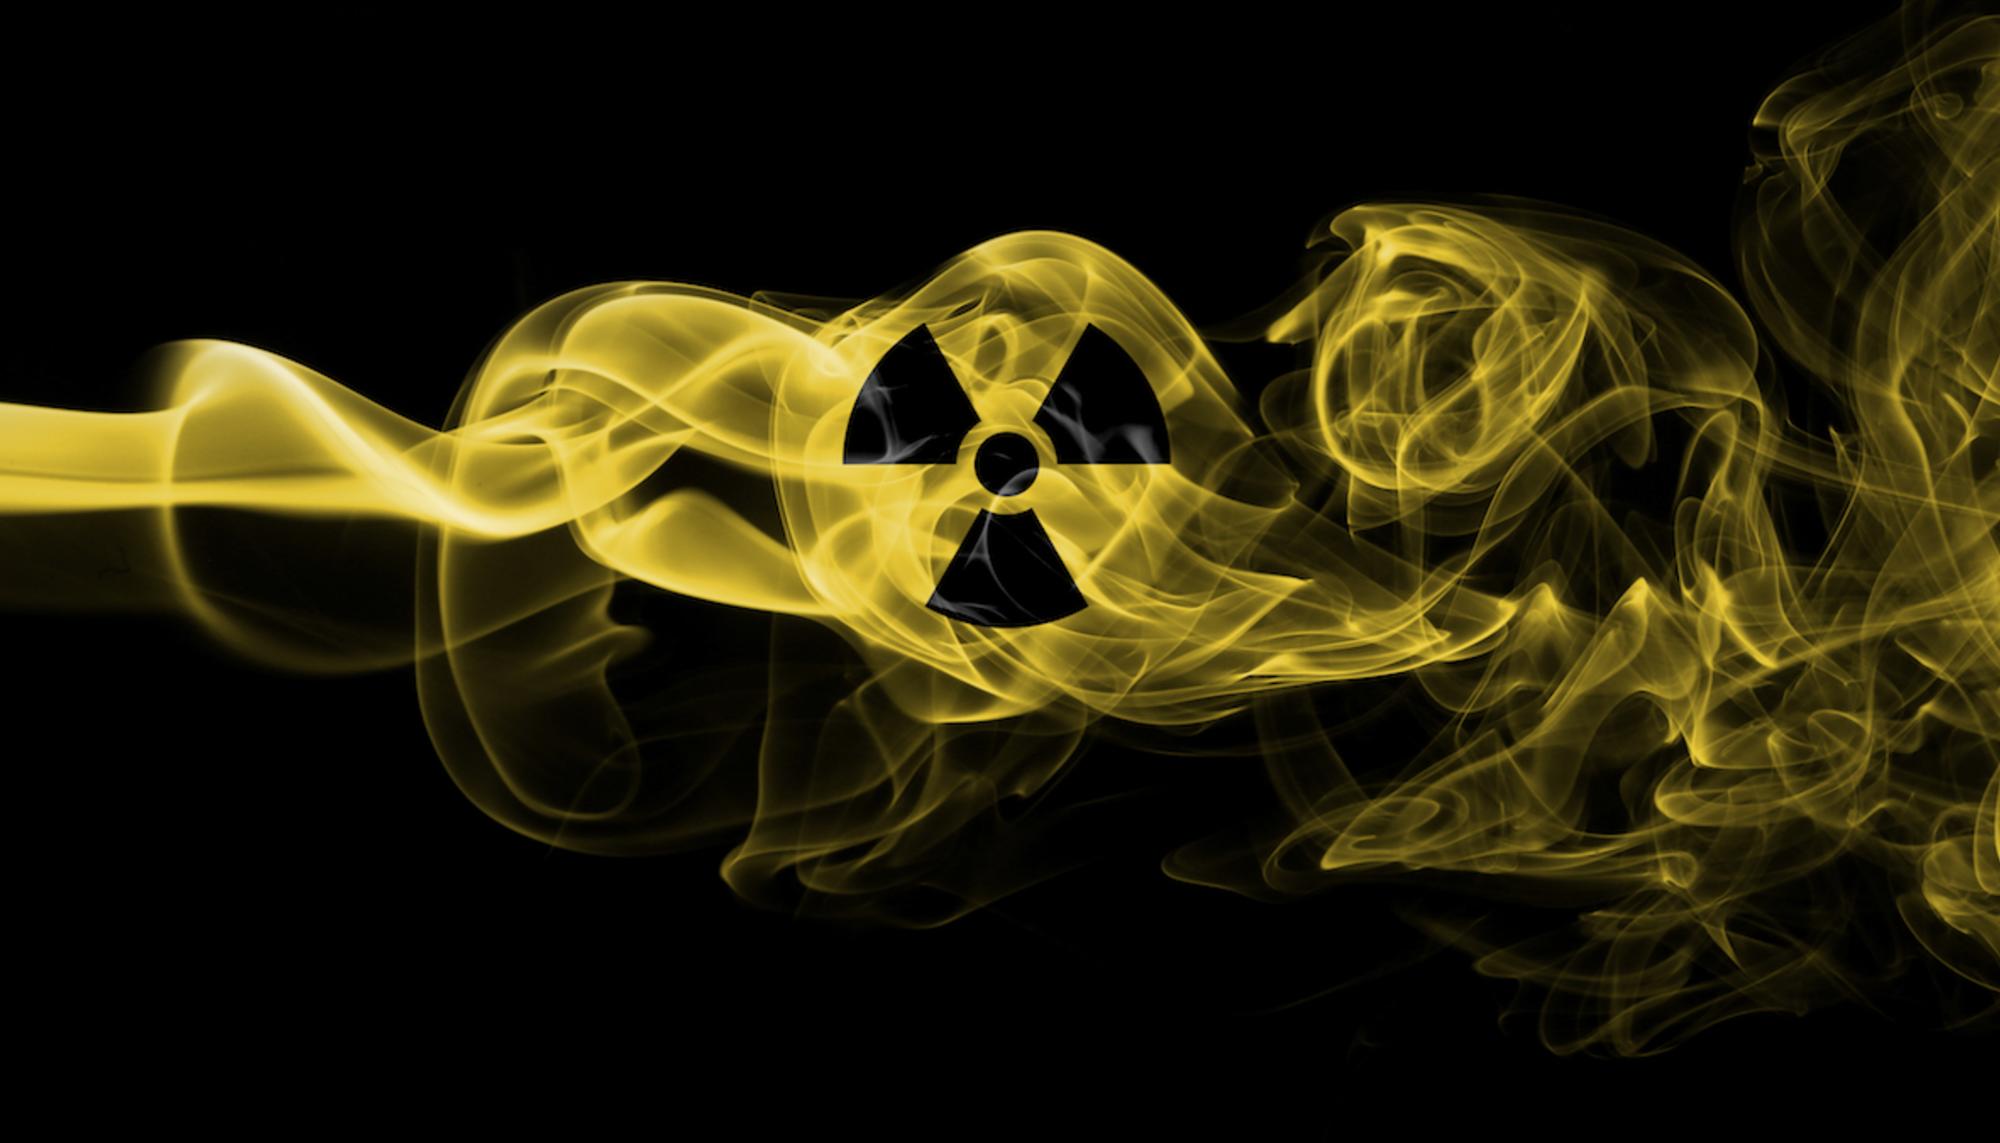 Radioactividad nuclear. Fuente: Beyond Nuclear International.